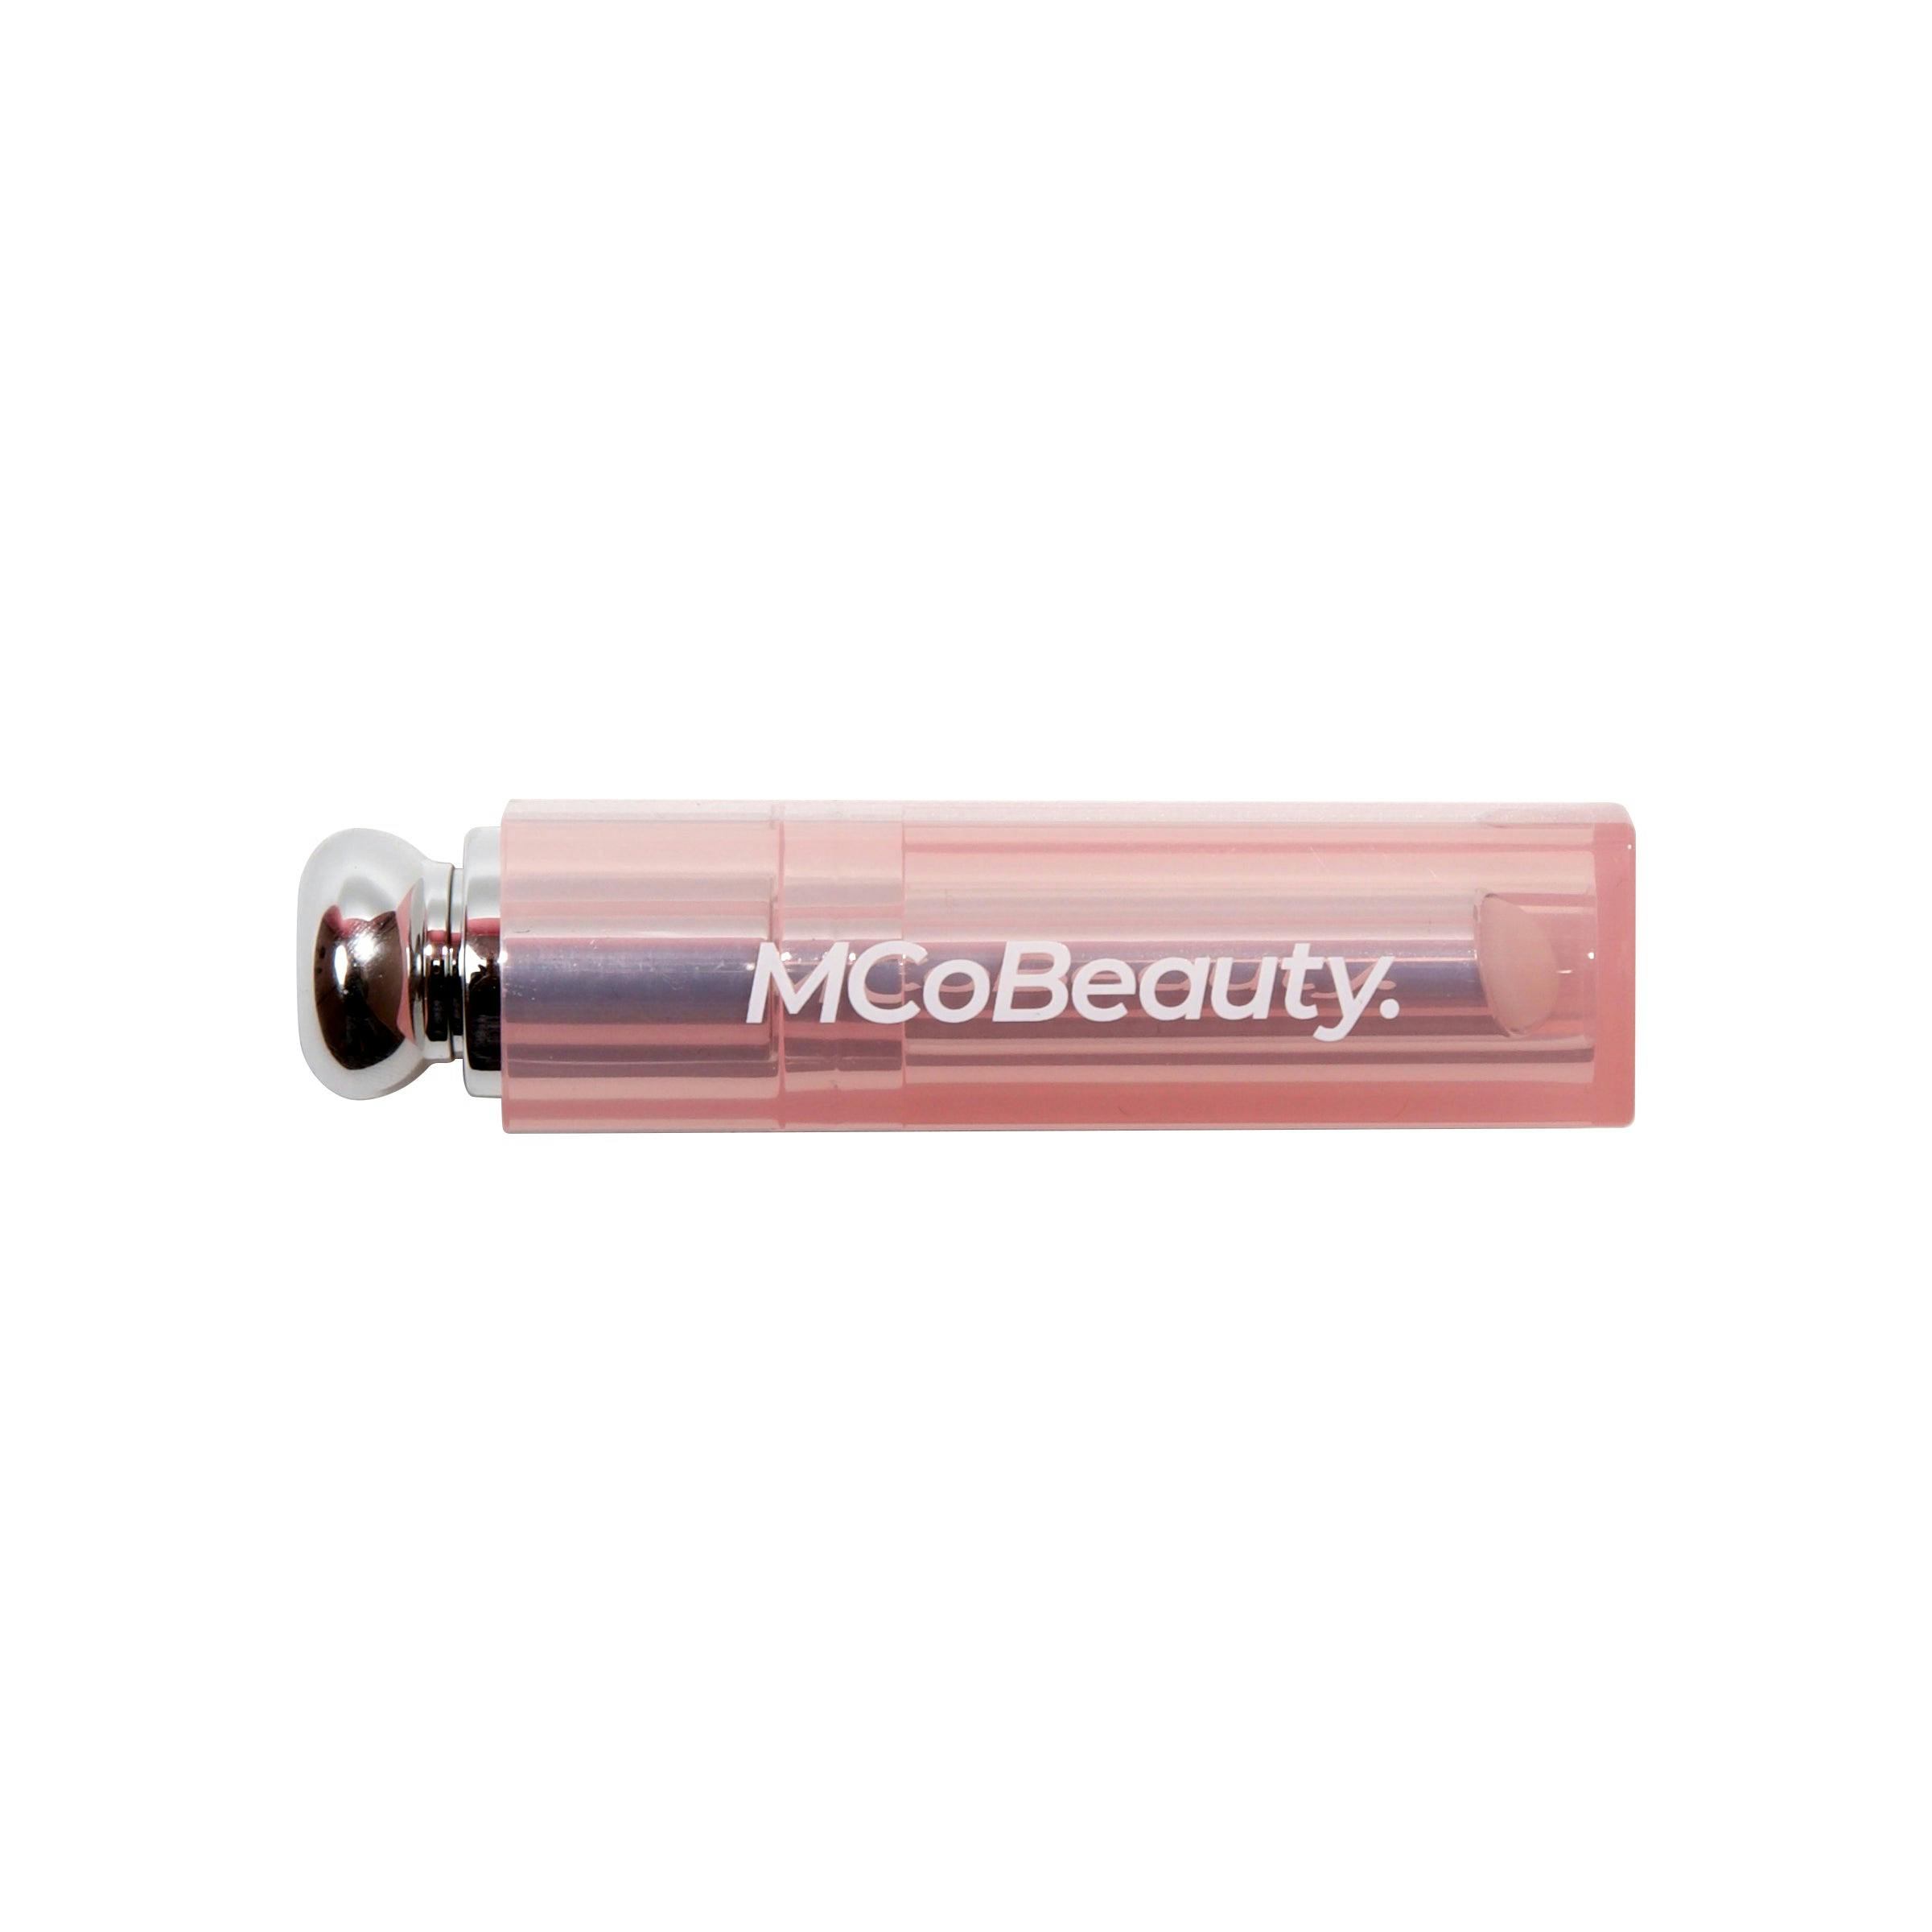 MCoBeauty Glow Up PH Lip Balm - Universal Colour Changing 3.5g